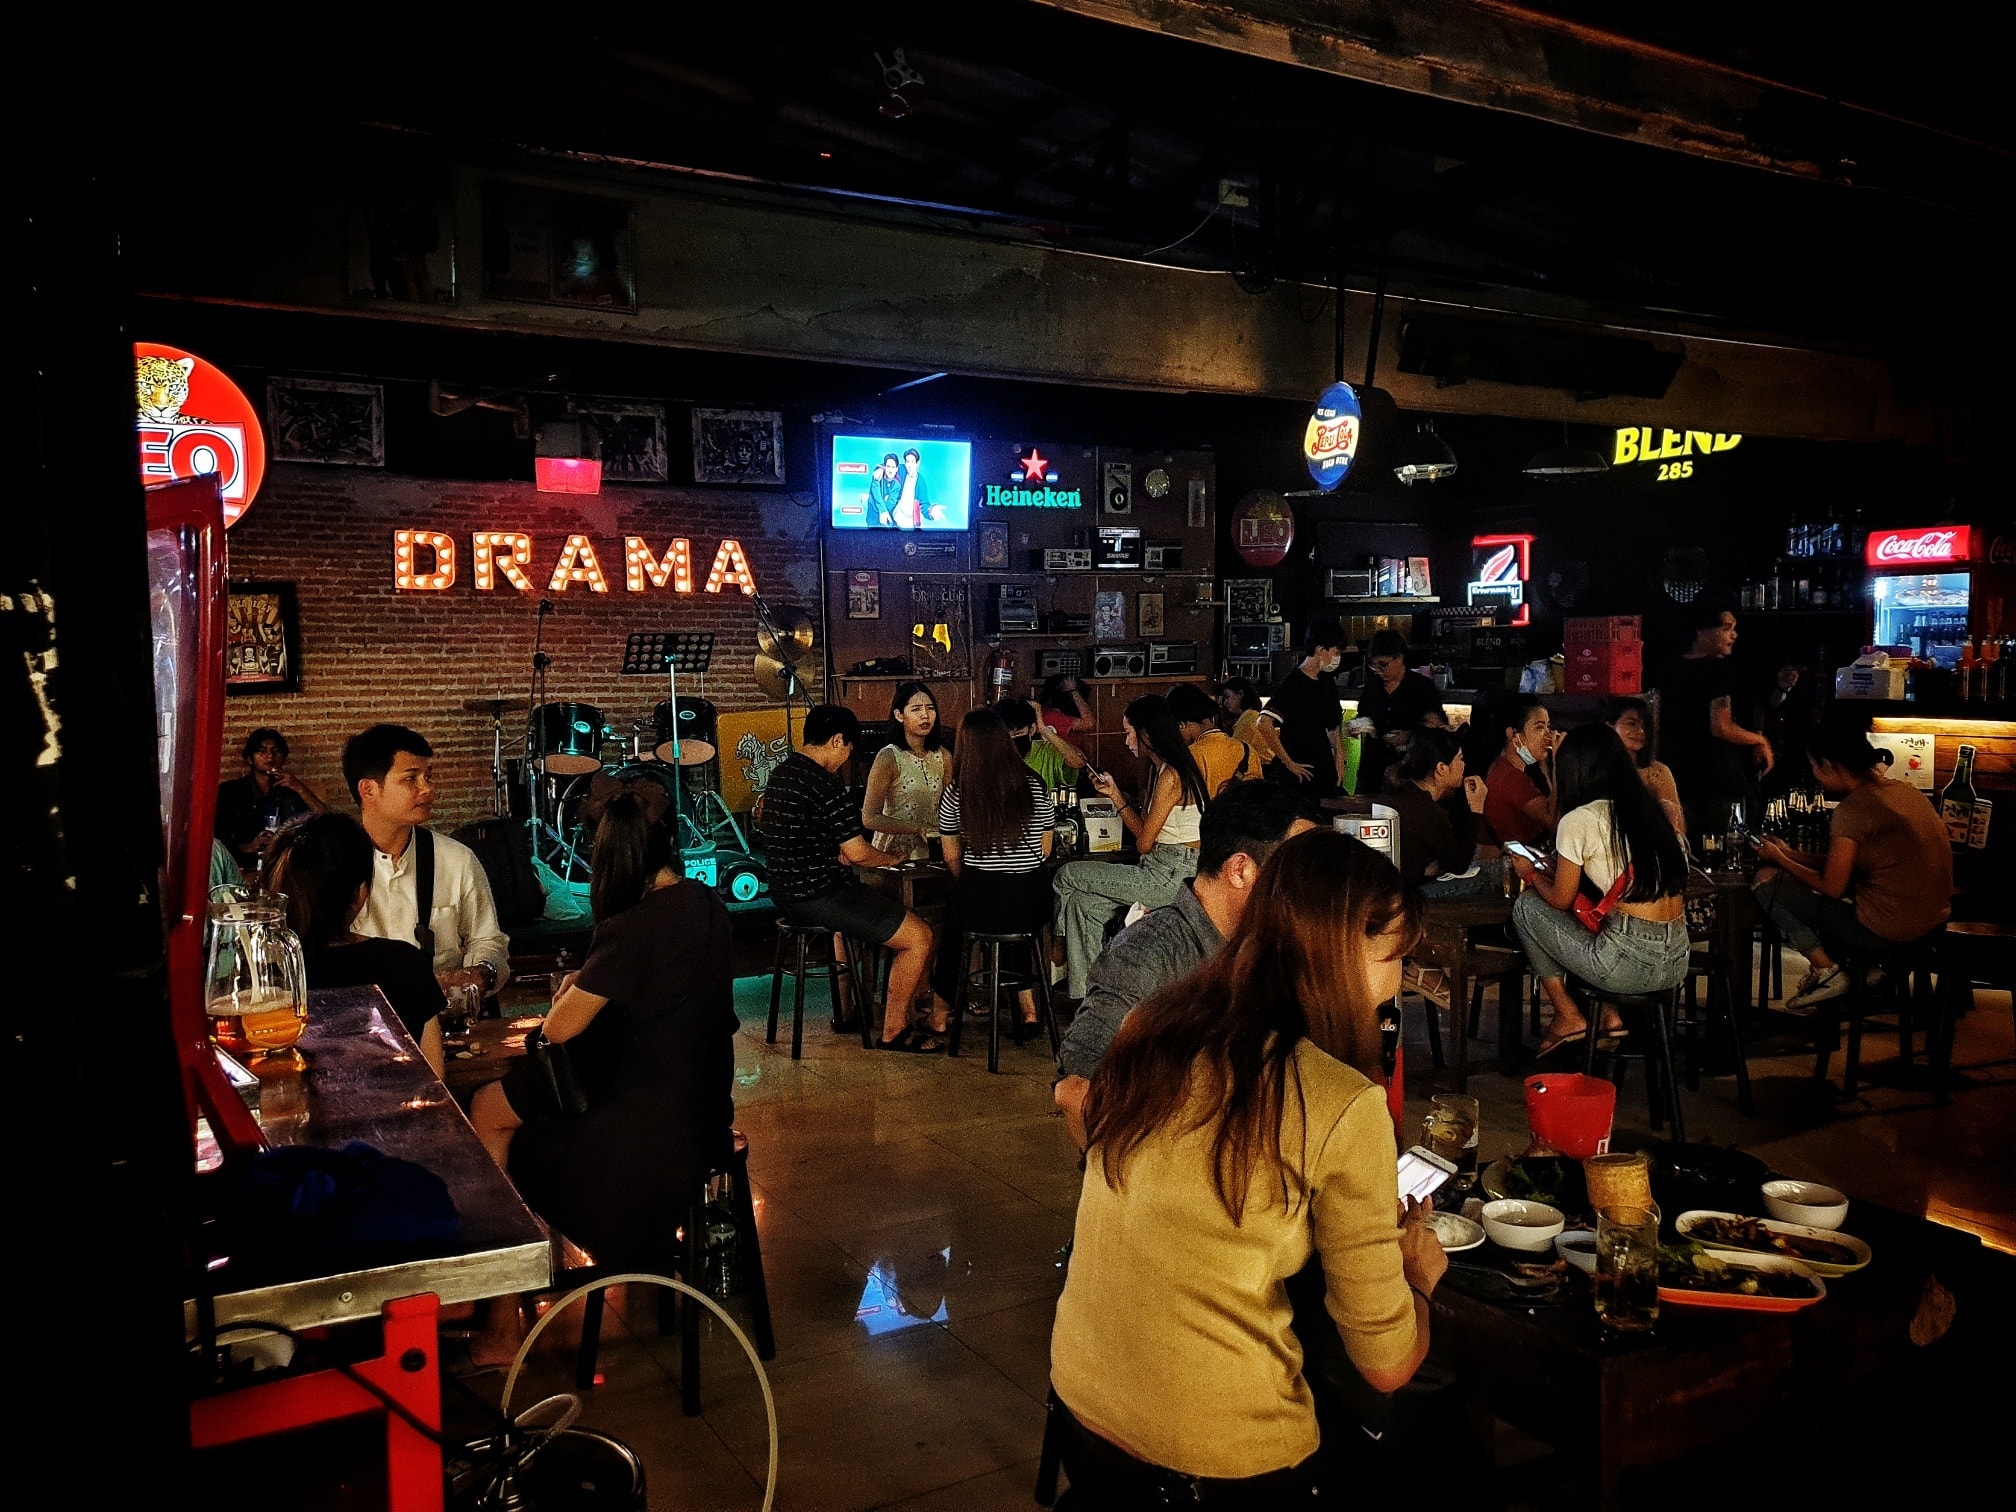 Dramacafe2 (ดราม่า คาเฟ่2) : Bangkok (กรุงเทพมหานคร)